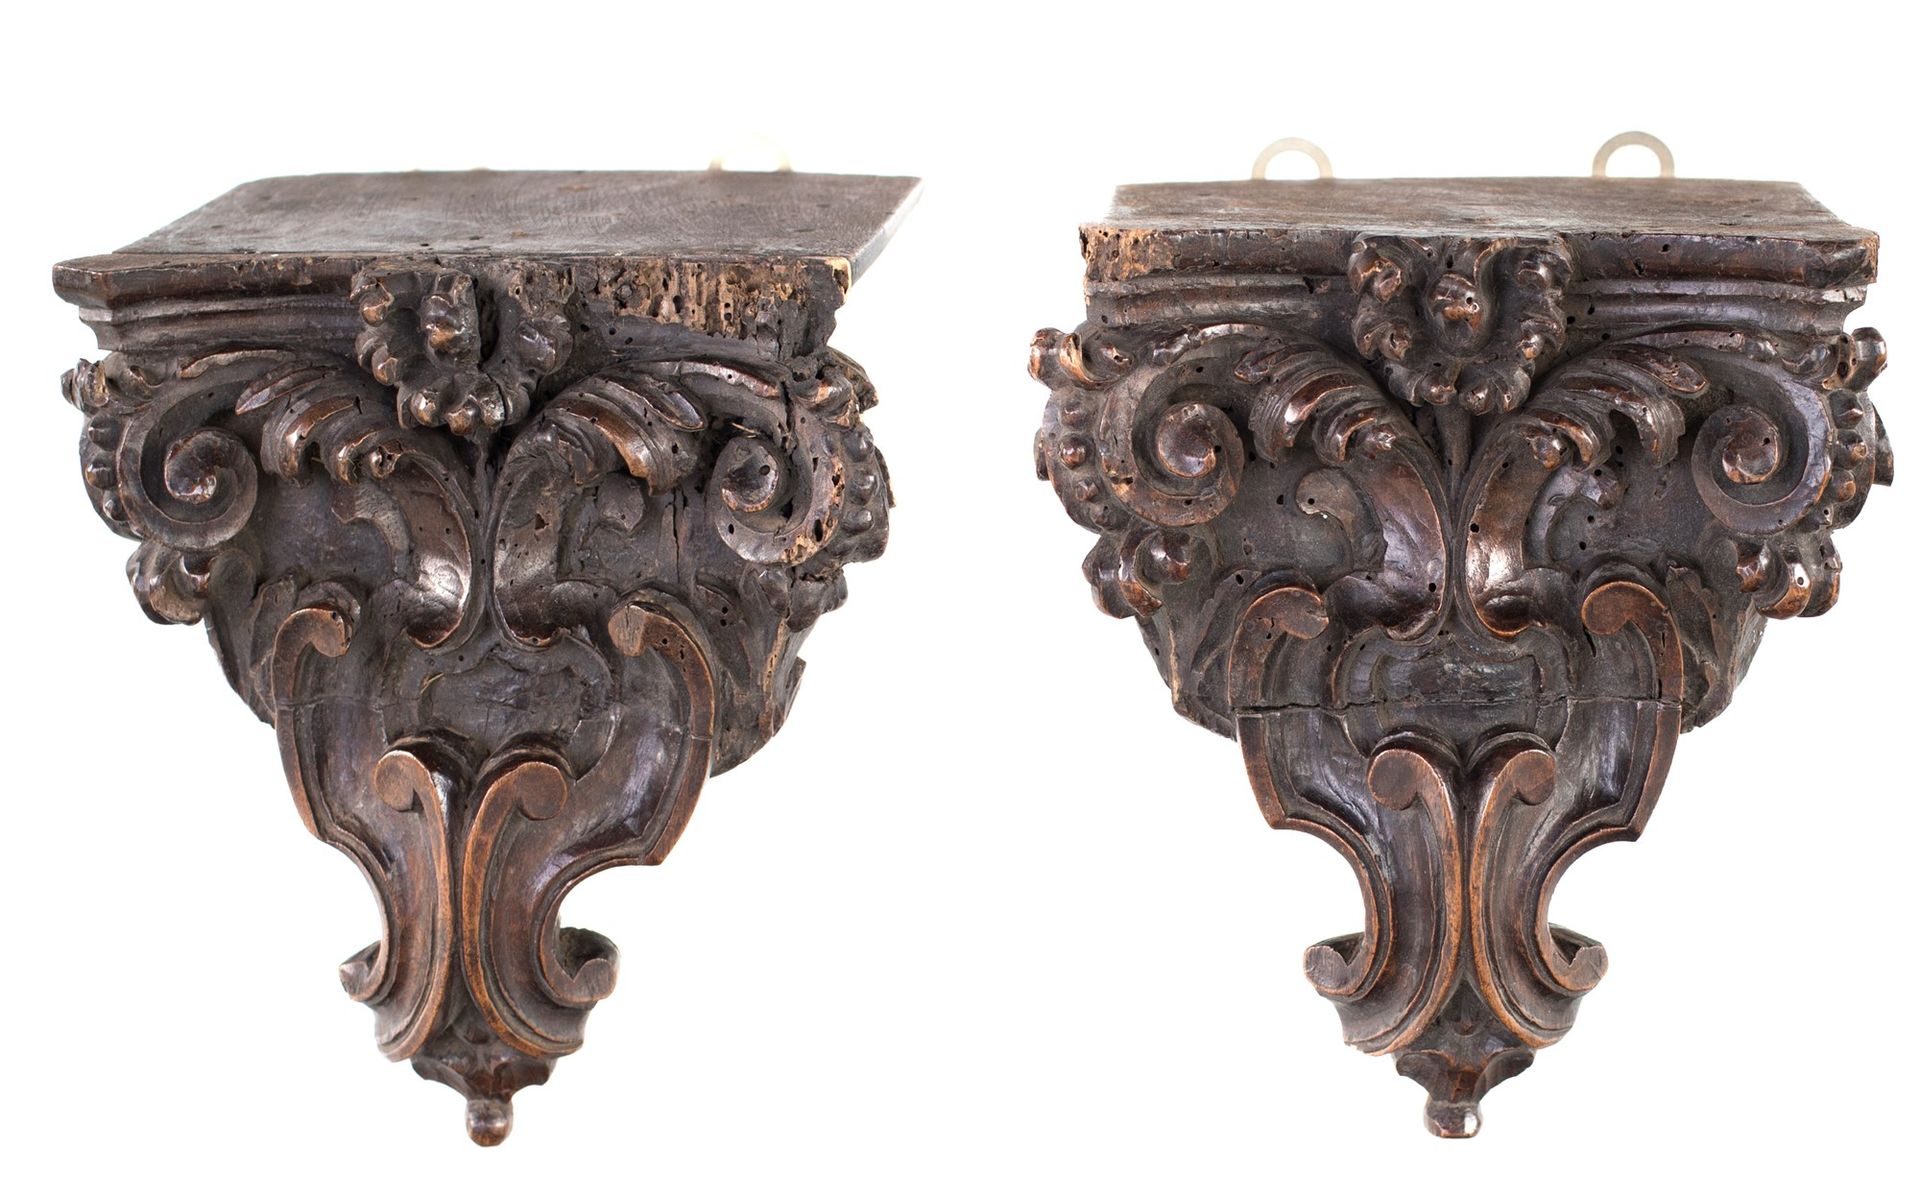 Pair of teardrop shelves in carved wood, 17th century 以植物浮雕为特征的